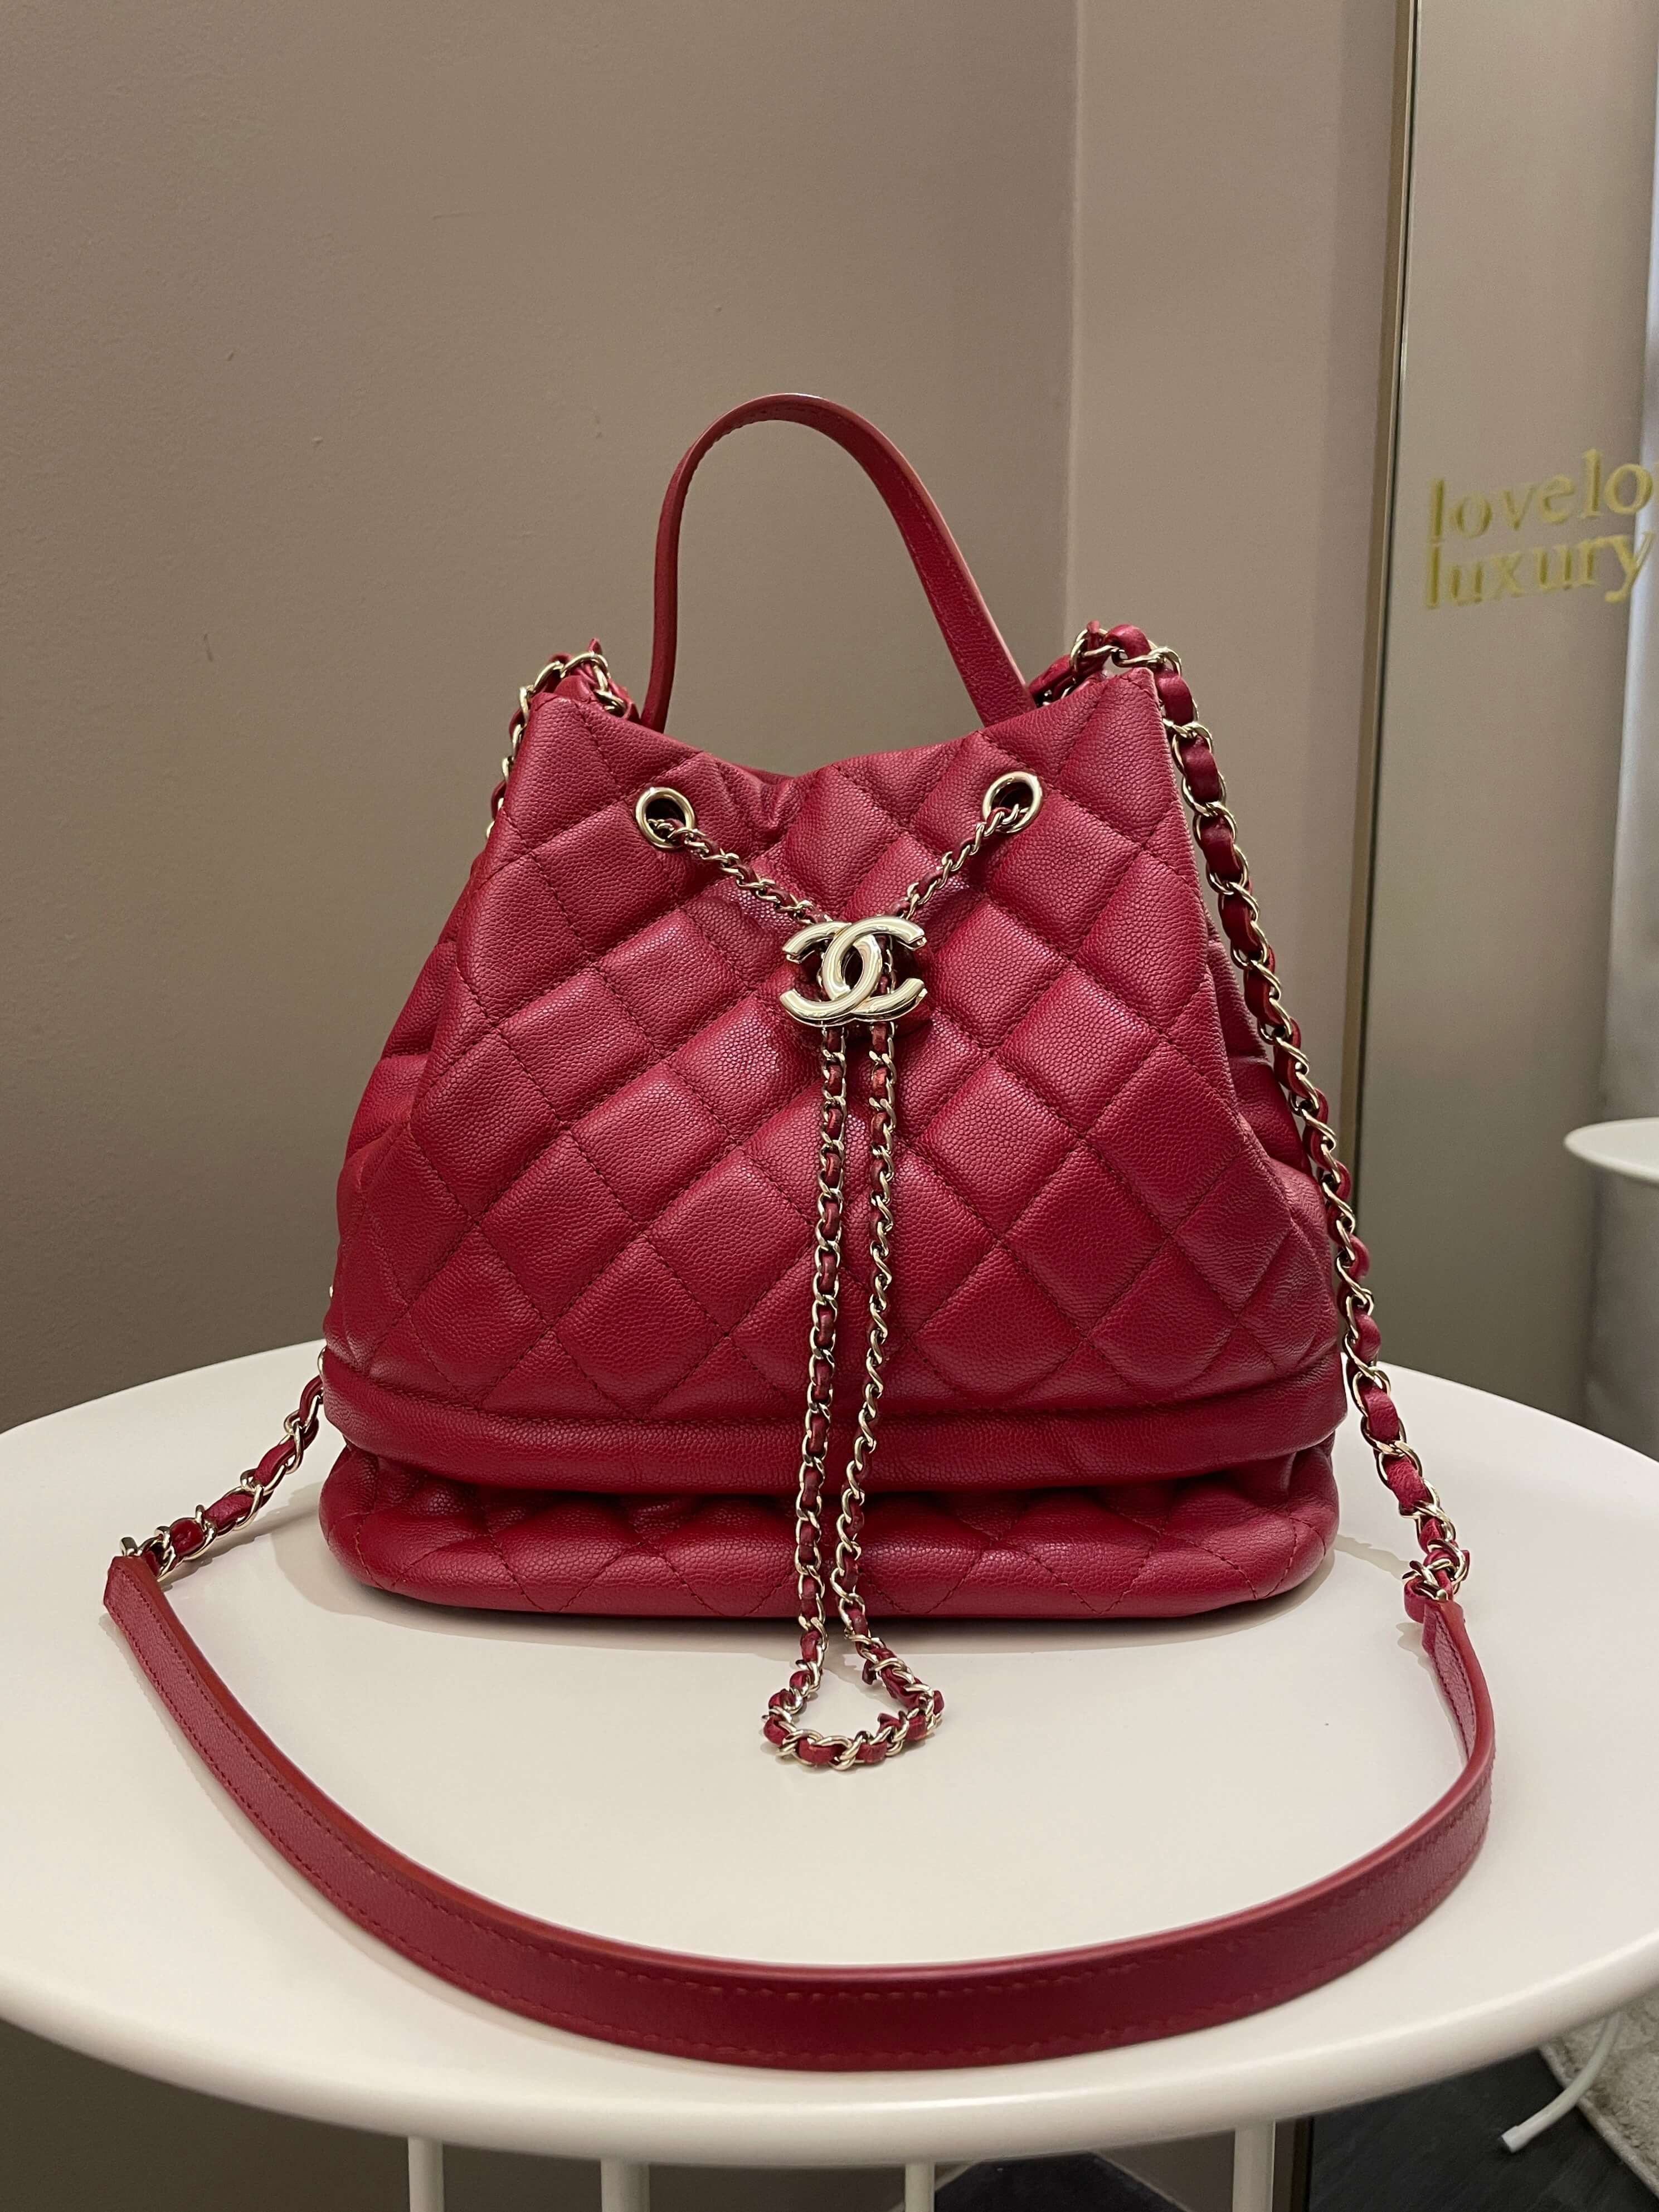 Chanel Rolled Up Bucket Drawstring Bag Red Caviar – ＬＯＶＥＬＯＴＳＬＵＸＵＲＹ